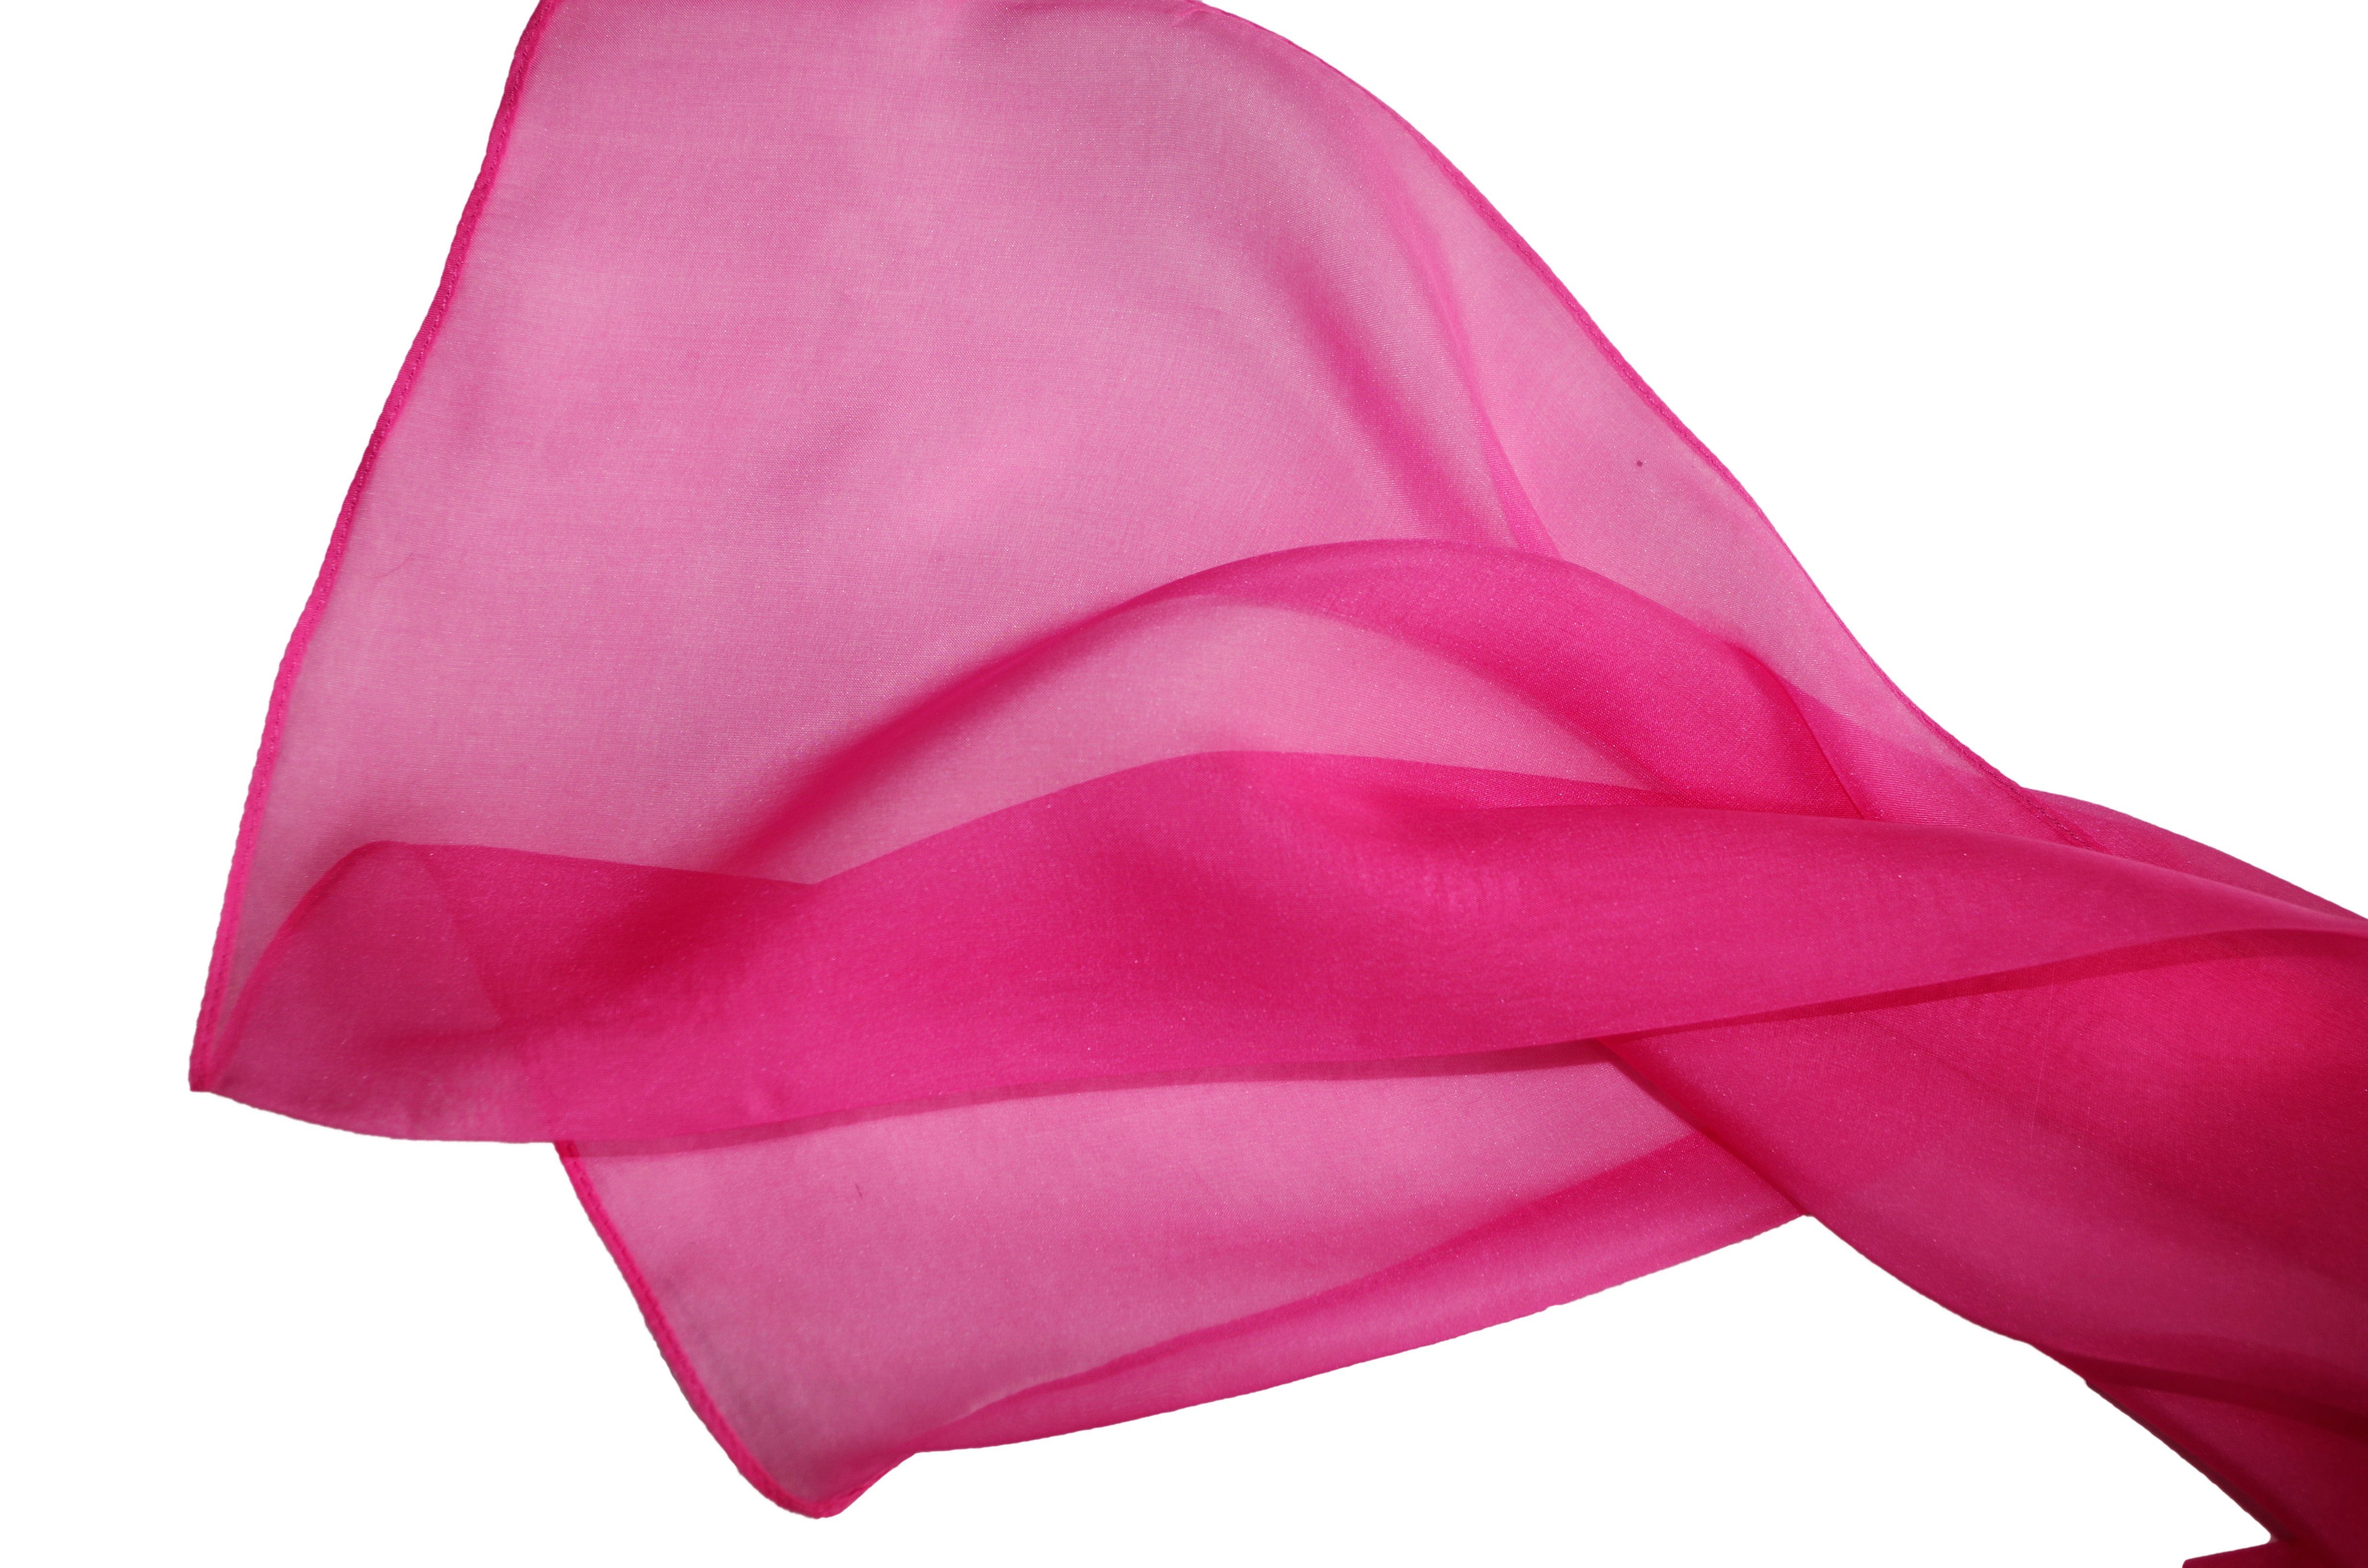 Posh Gear Seidenschal Seiden Schal Chiffon aus Seide rosa 100% Scialle